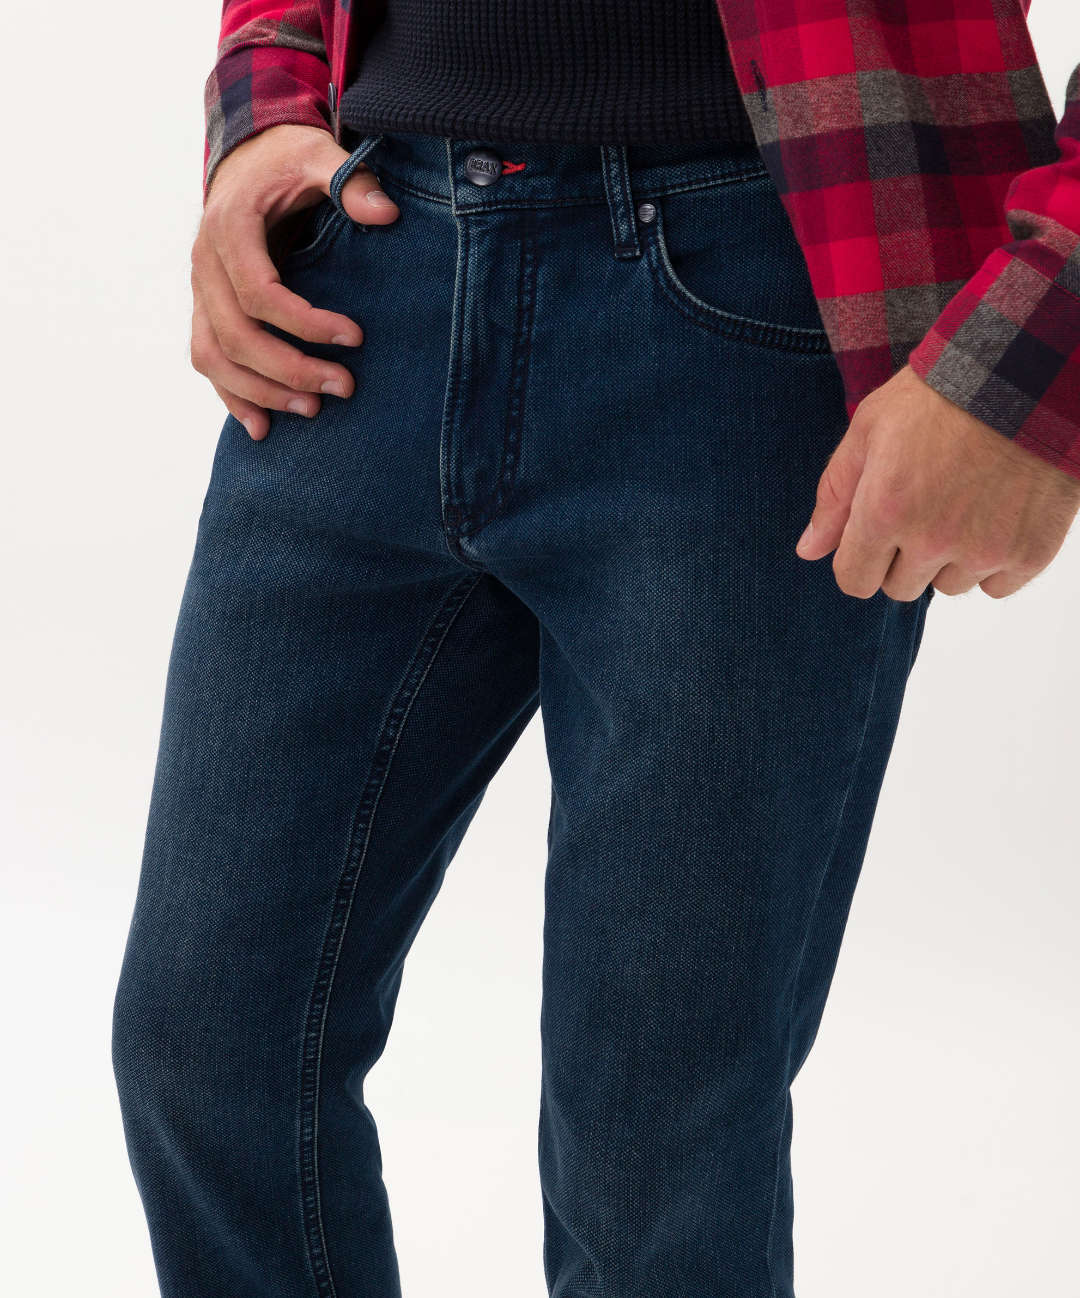 jeans – Brax stretchy Hi-FLEX: five-pocket Super Chuck Savile Lane